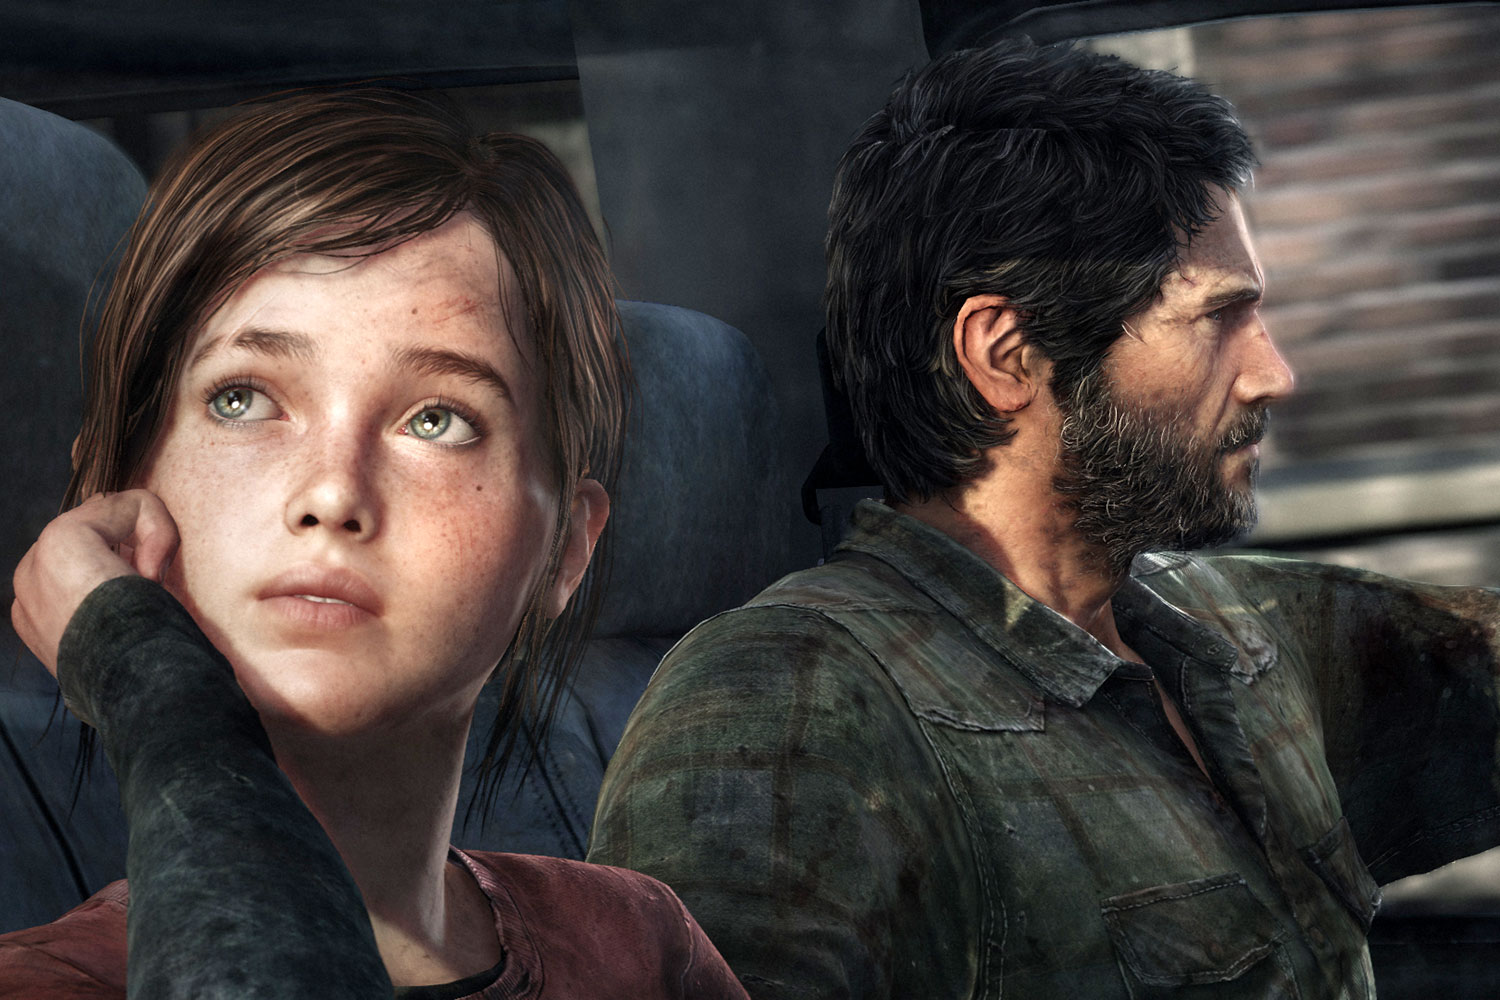 The Last of Us HBO Ellie Unlockable Skins! (PC Exclusive?) : r/thelastofus